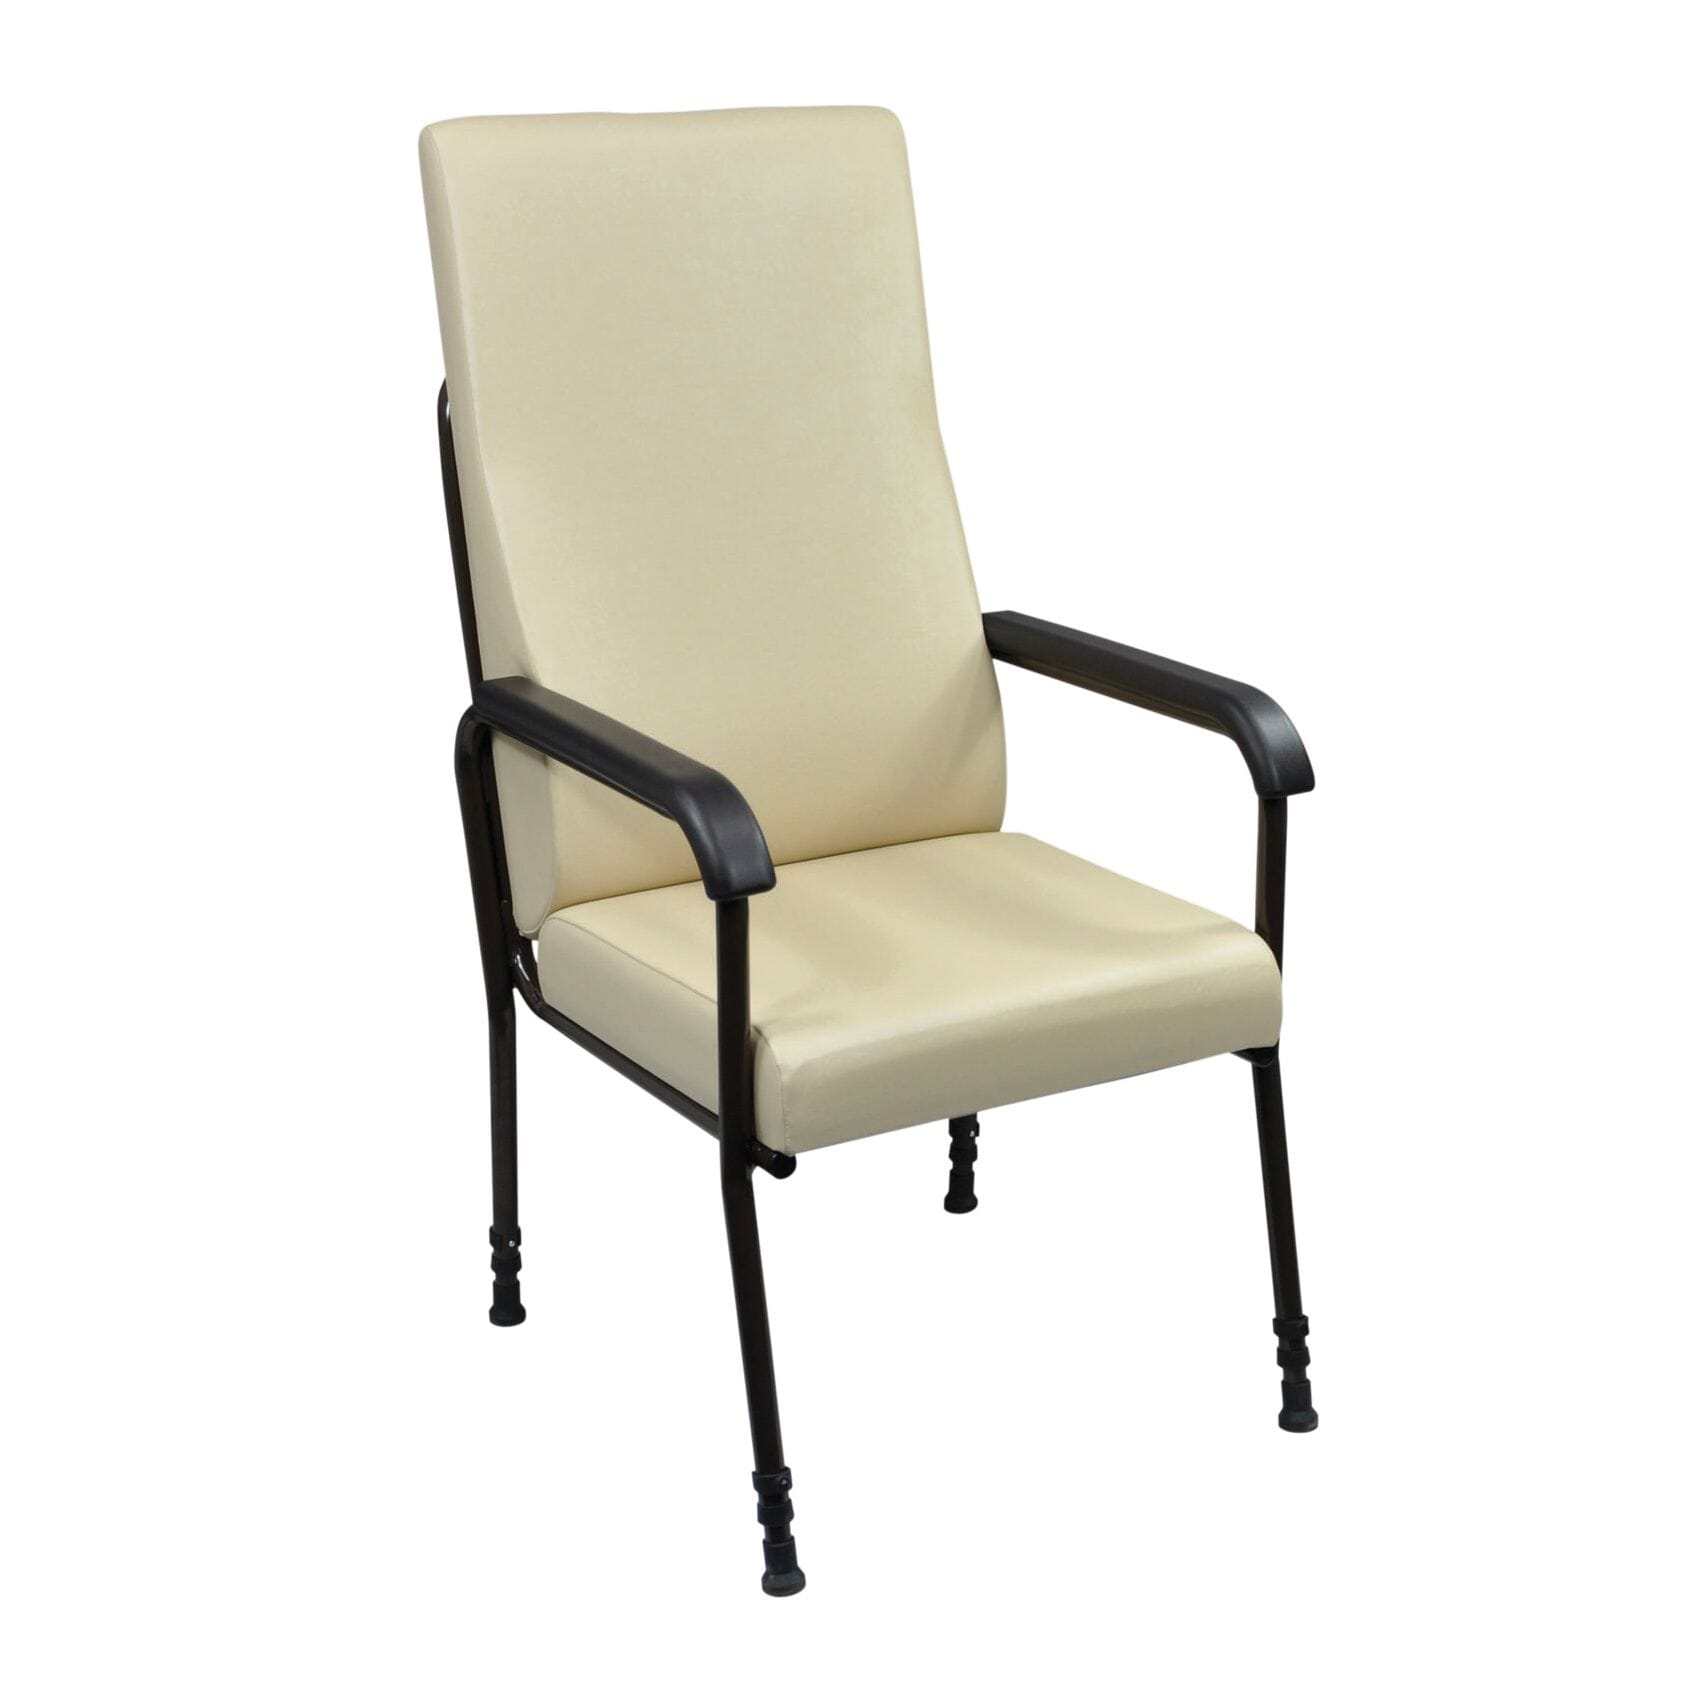 View Longfield Lounge Chair Cream information